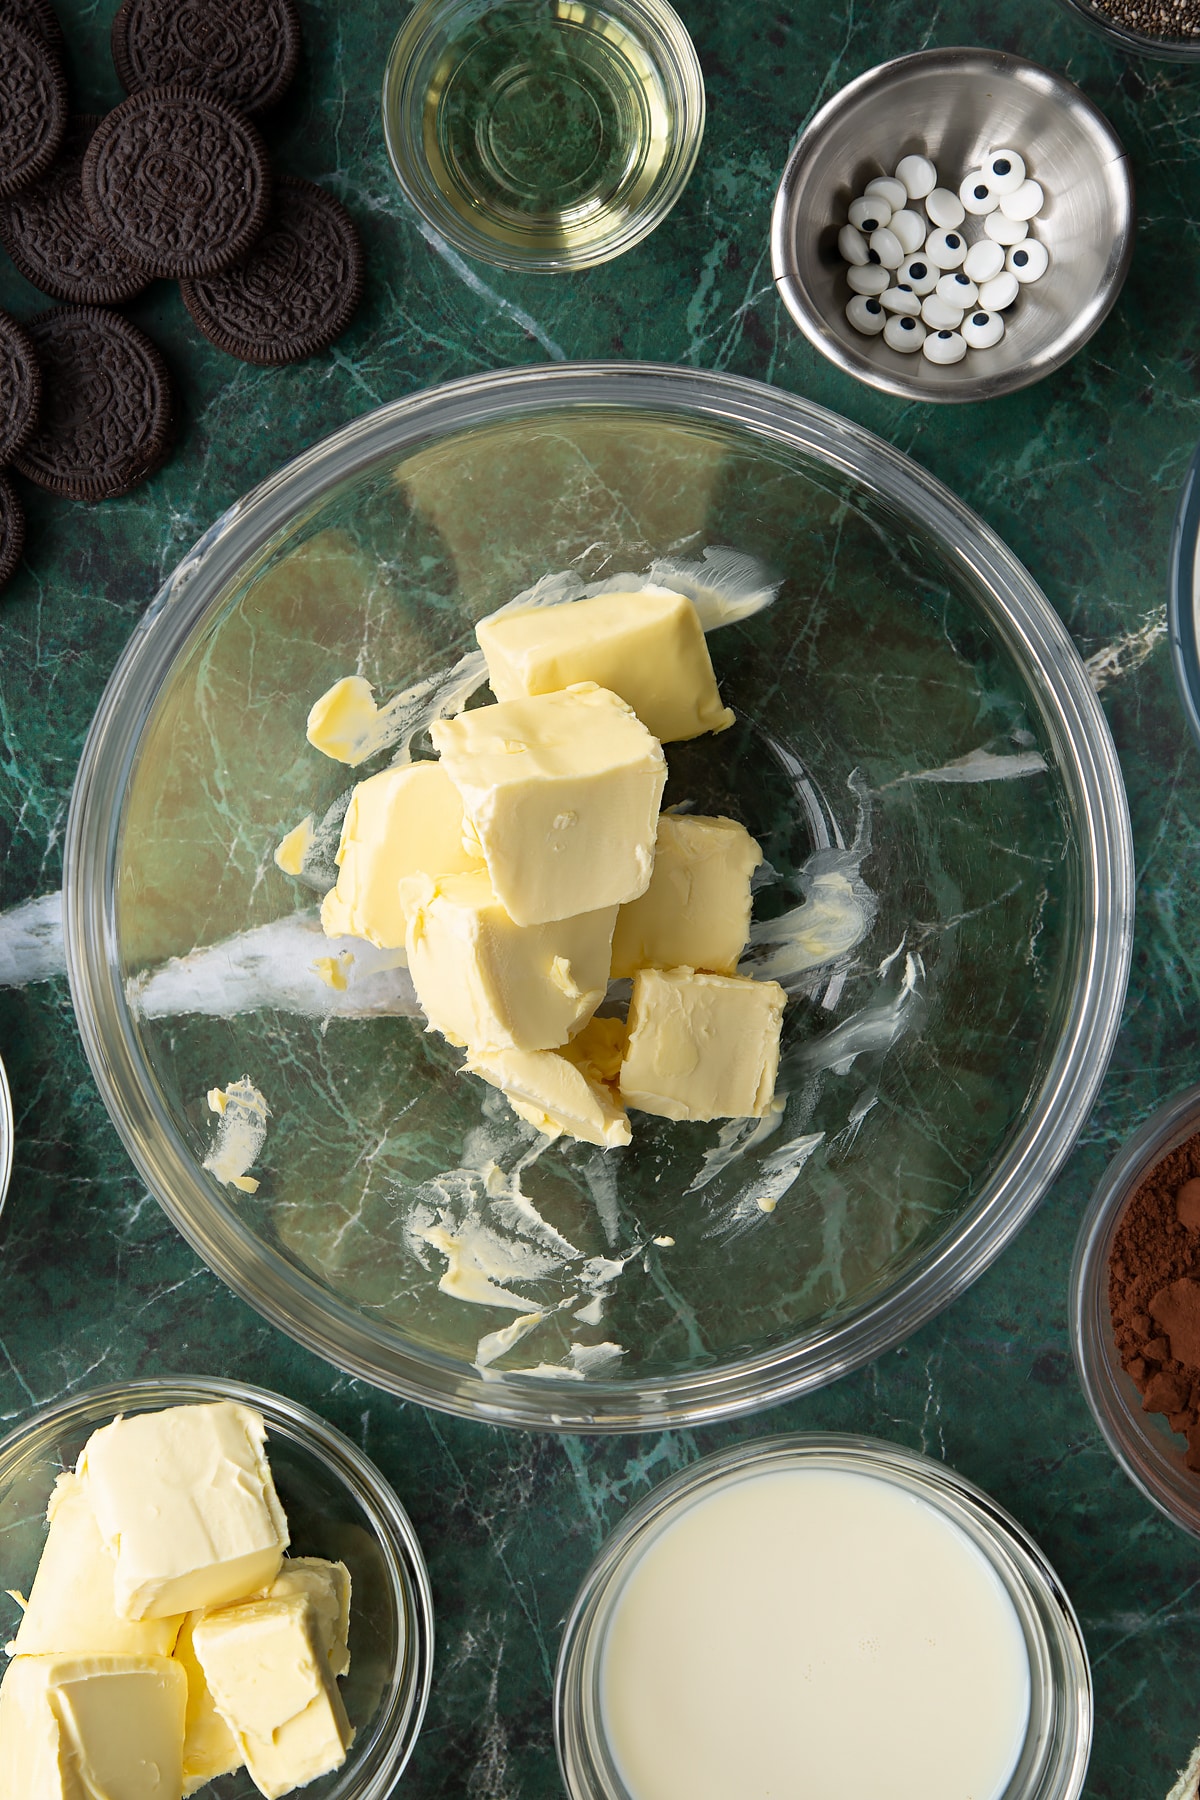 Vegan butter in a glass mixing bowl. Ingredients to make vegan Halloween cupcakes surround the bowl.